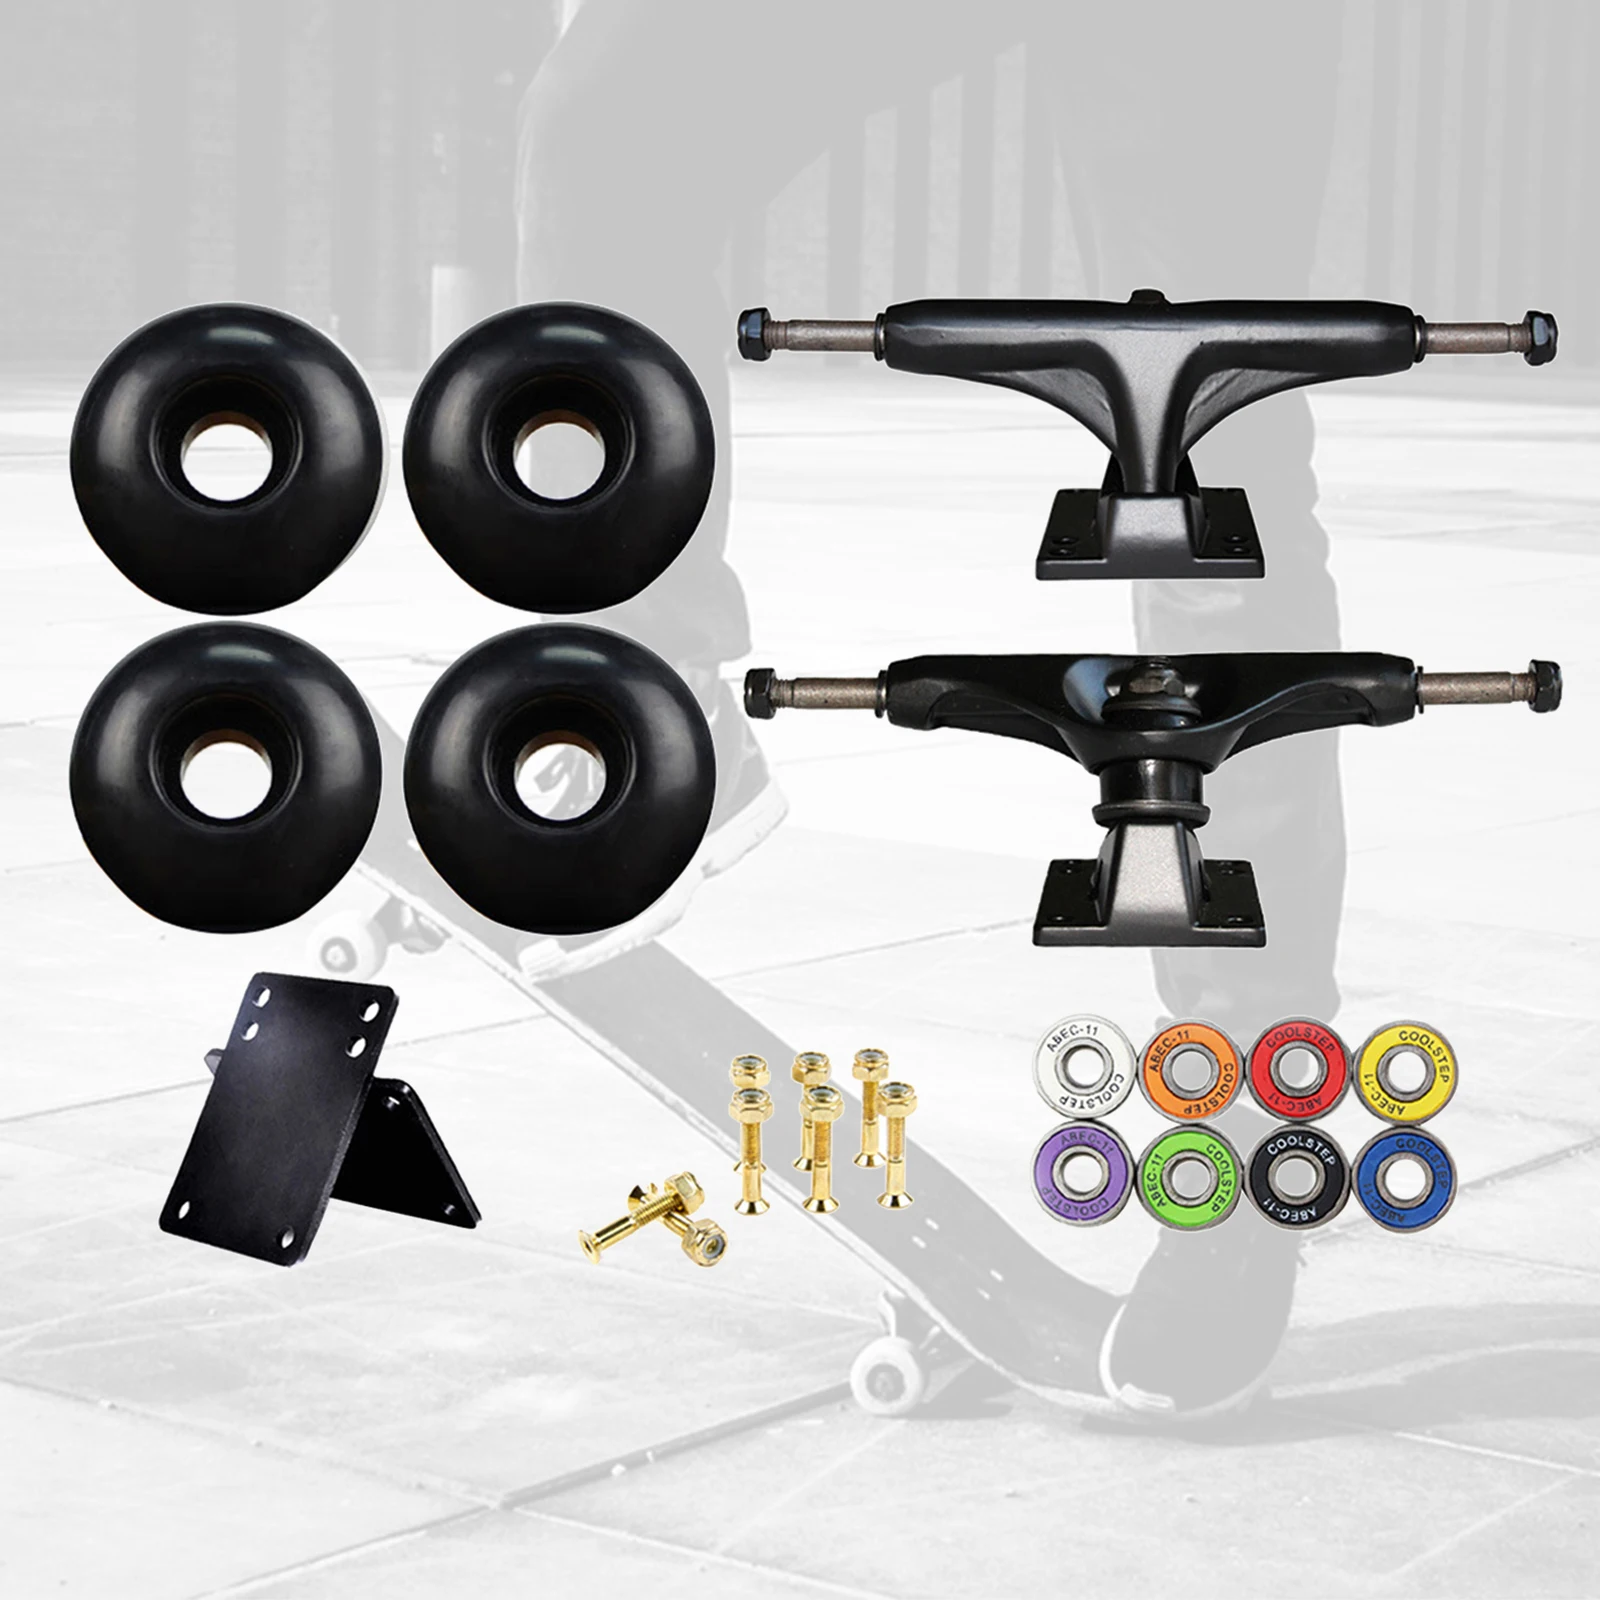 Skateboard Axles, Rolls 52mm, Skateboard Warehouse -11, Skateboard Replacement Tool Accessories, Skateboard Pads, Hardware